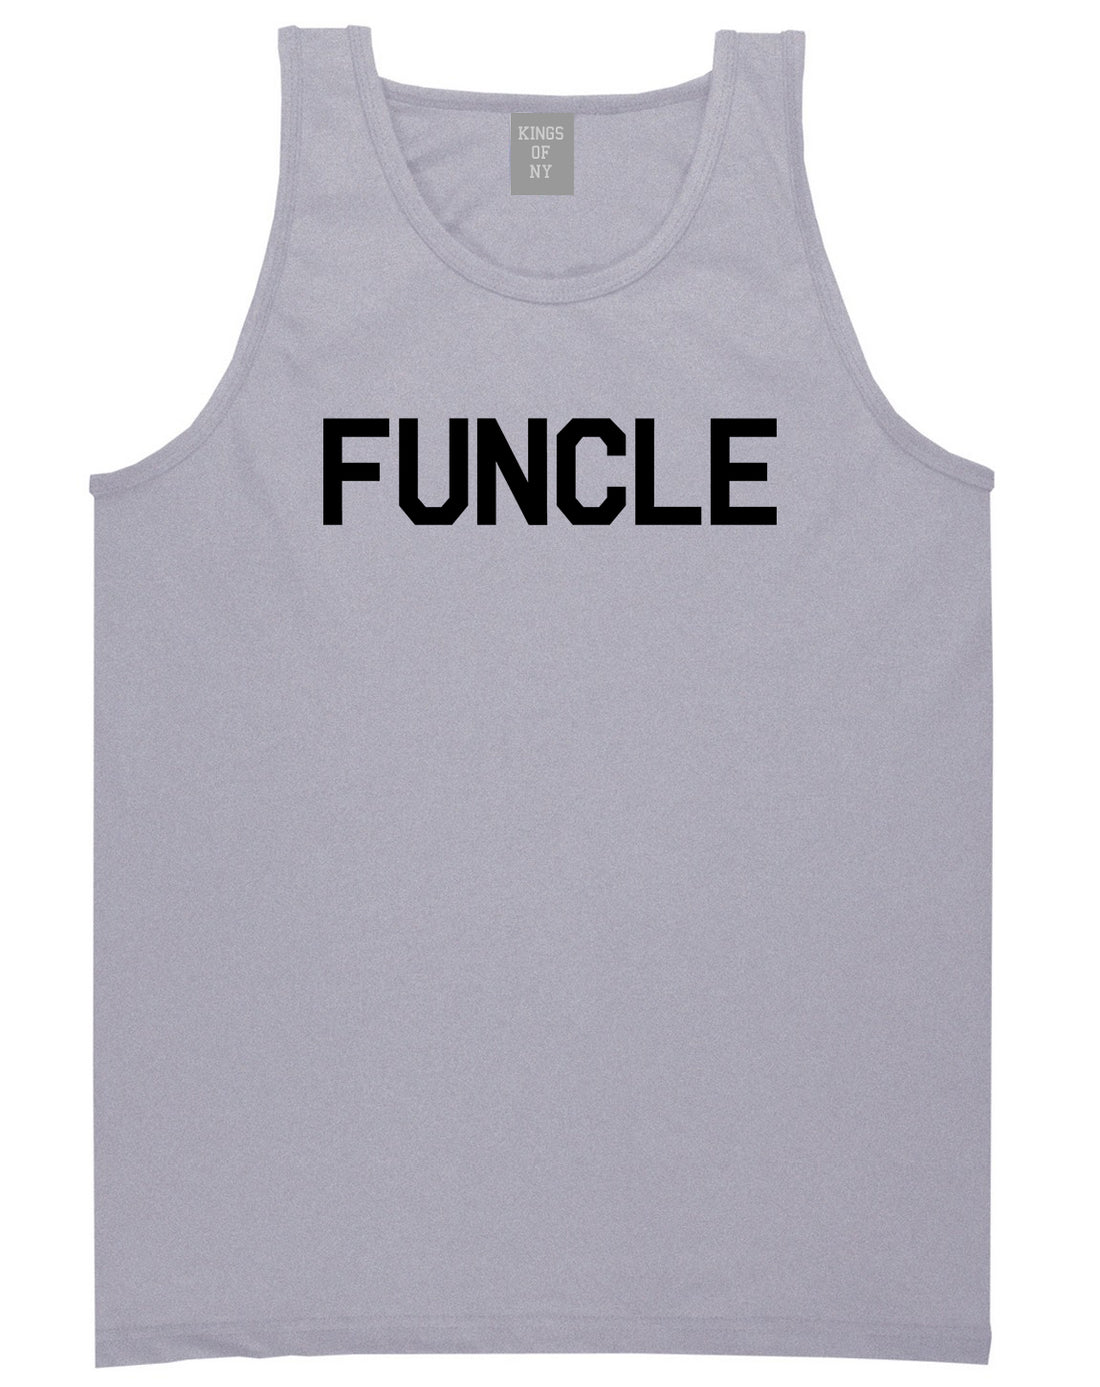 Funcle Fun Funny Uncle Mens Tank Top T-Shirt Grey